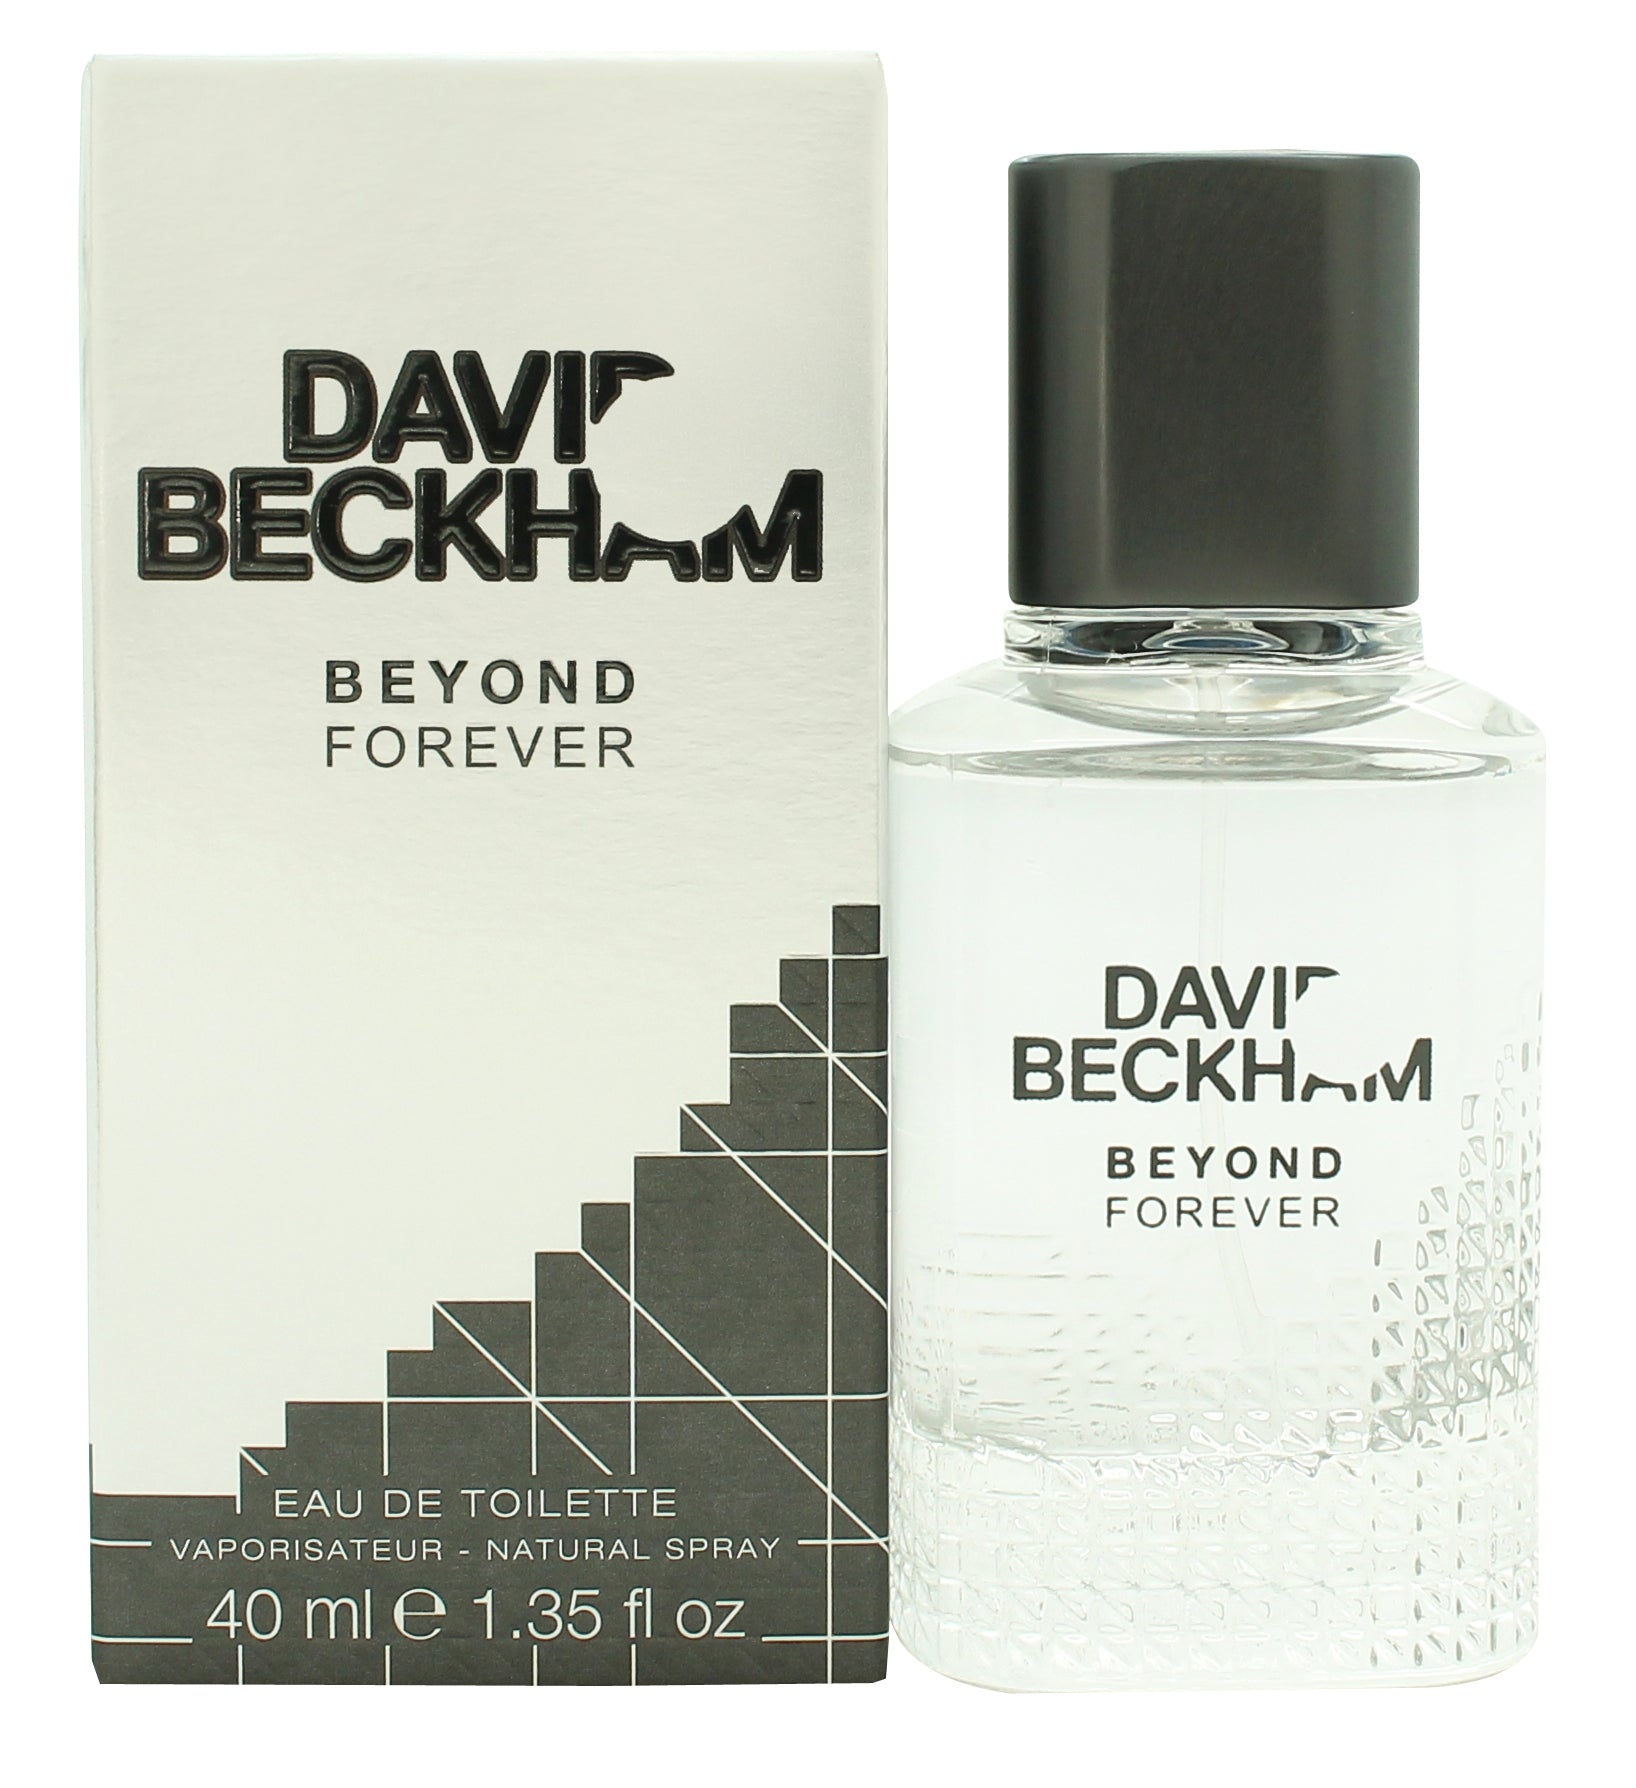 View David Beckham Beyond Forever Eau de Toilette 40ml Sprej information